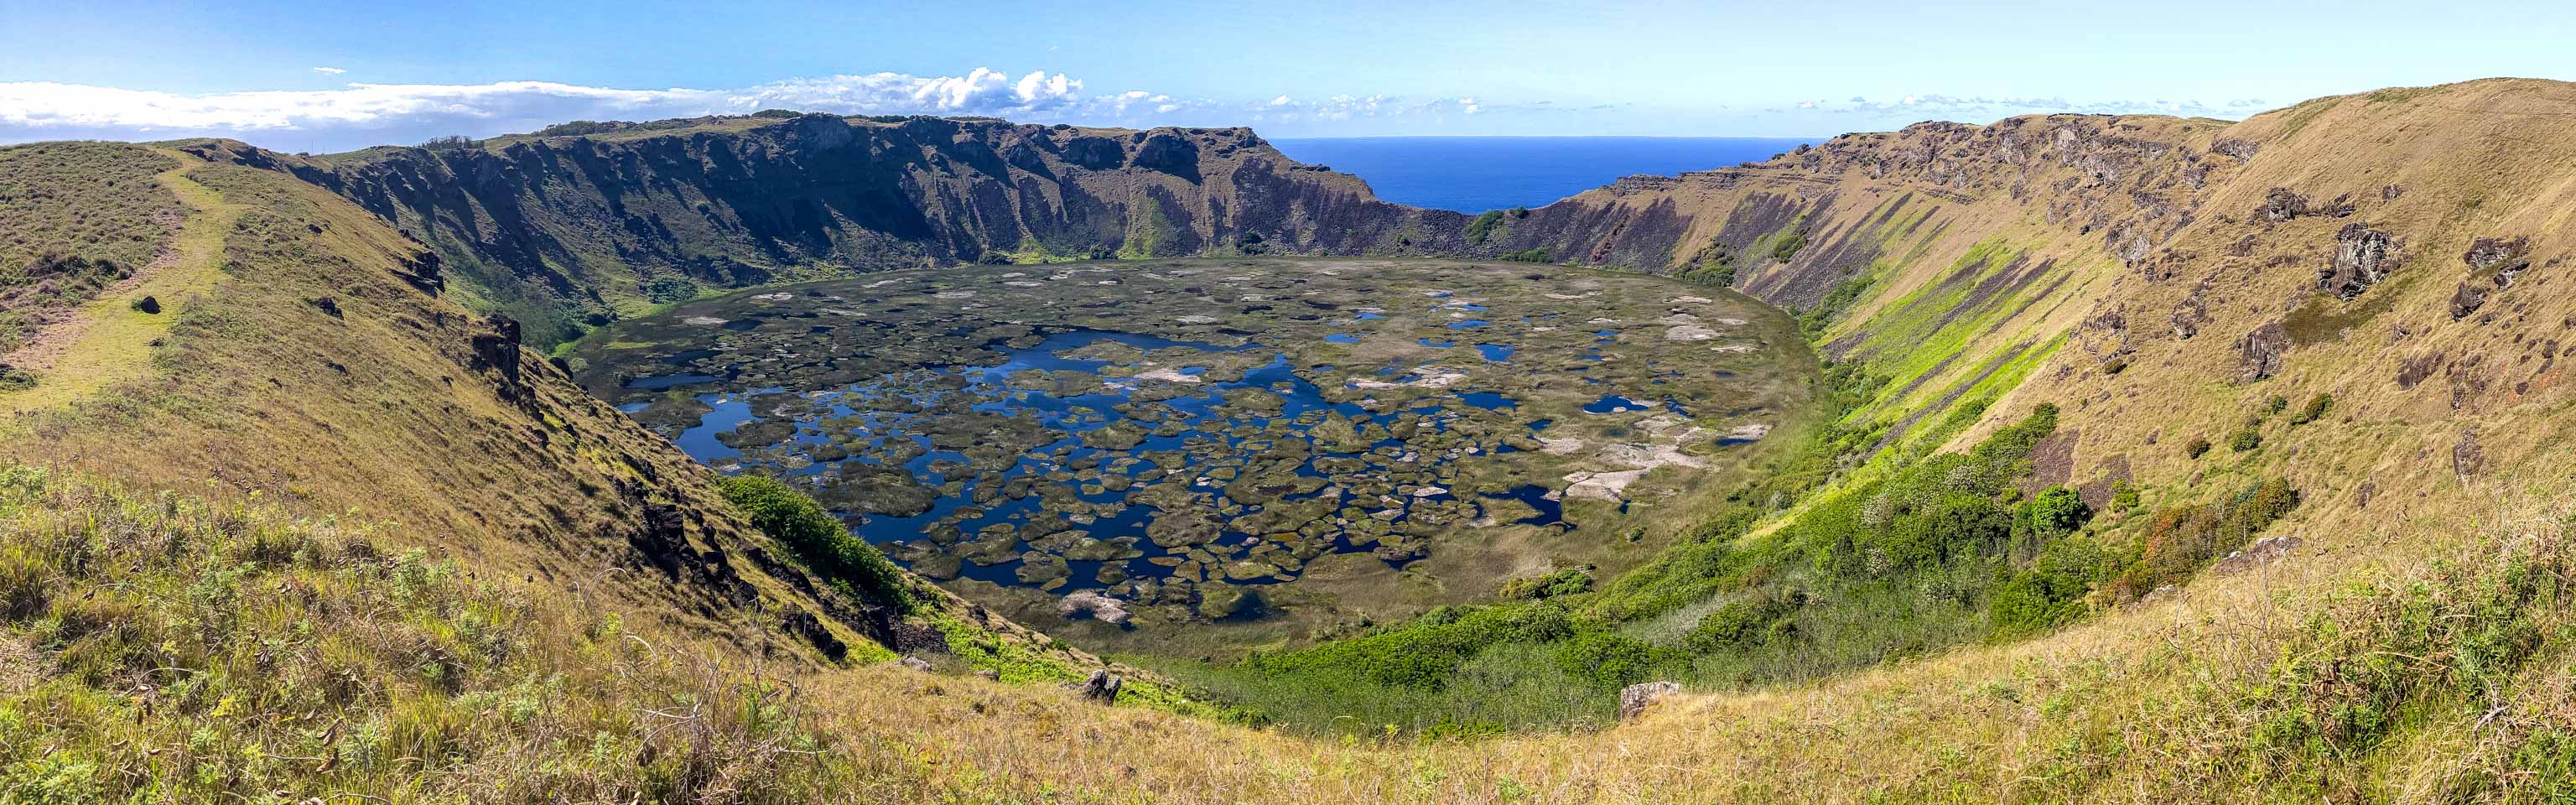 Rano Kau volcanic crater